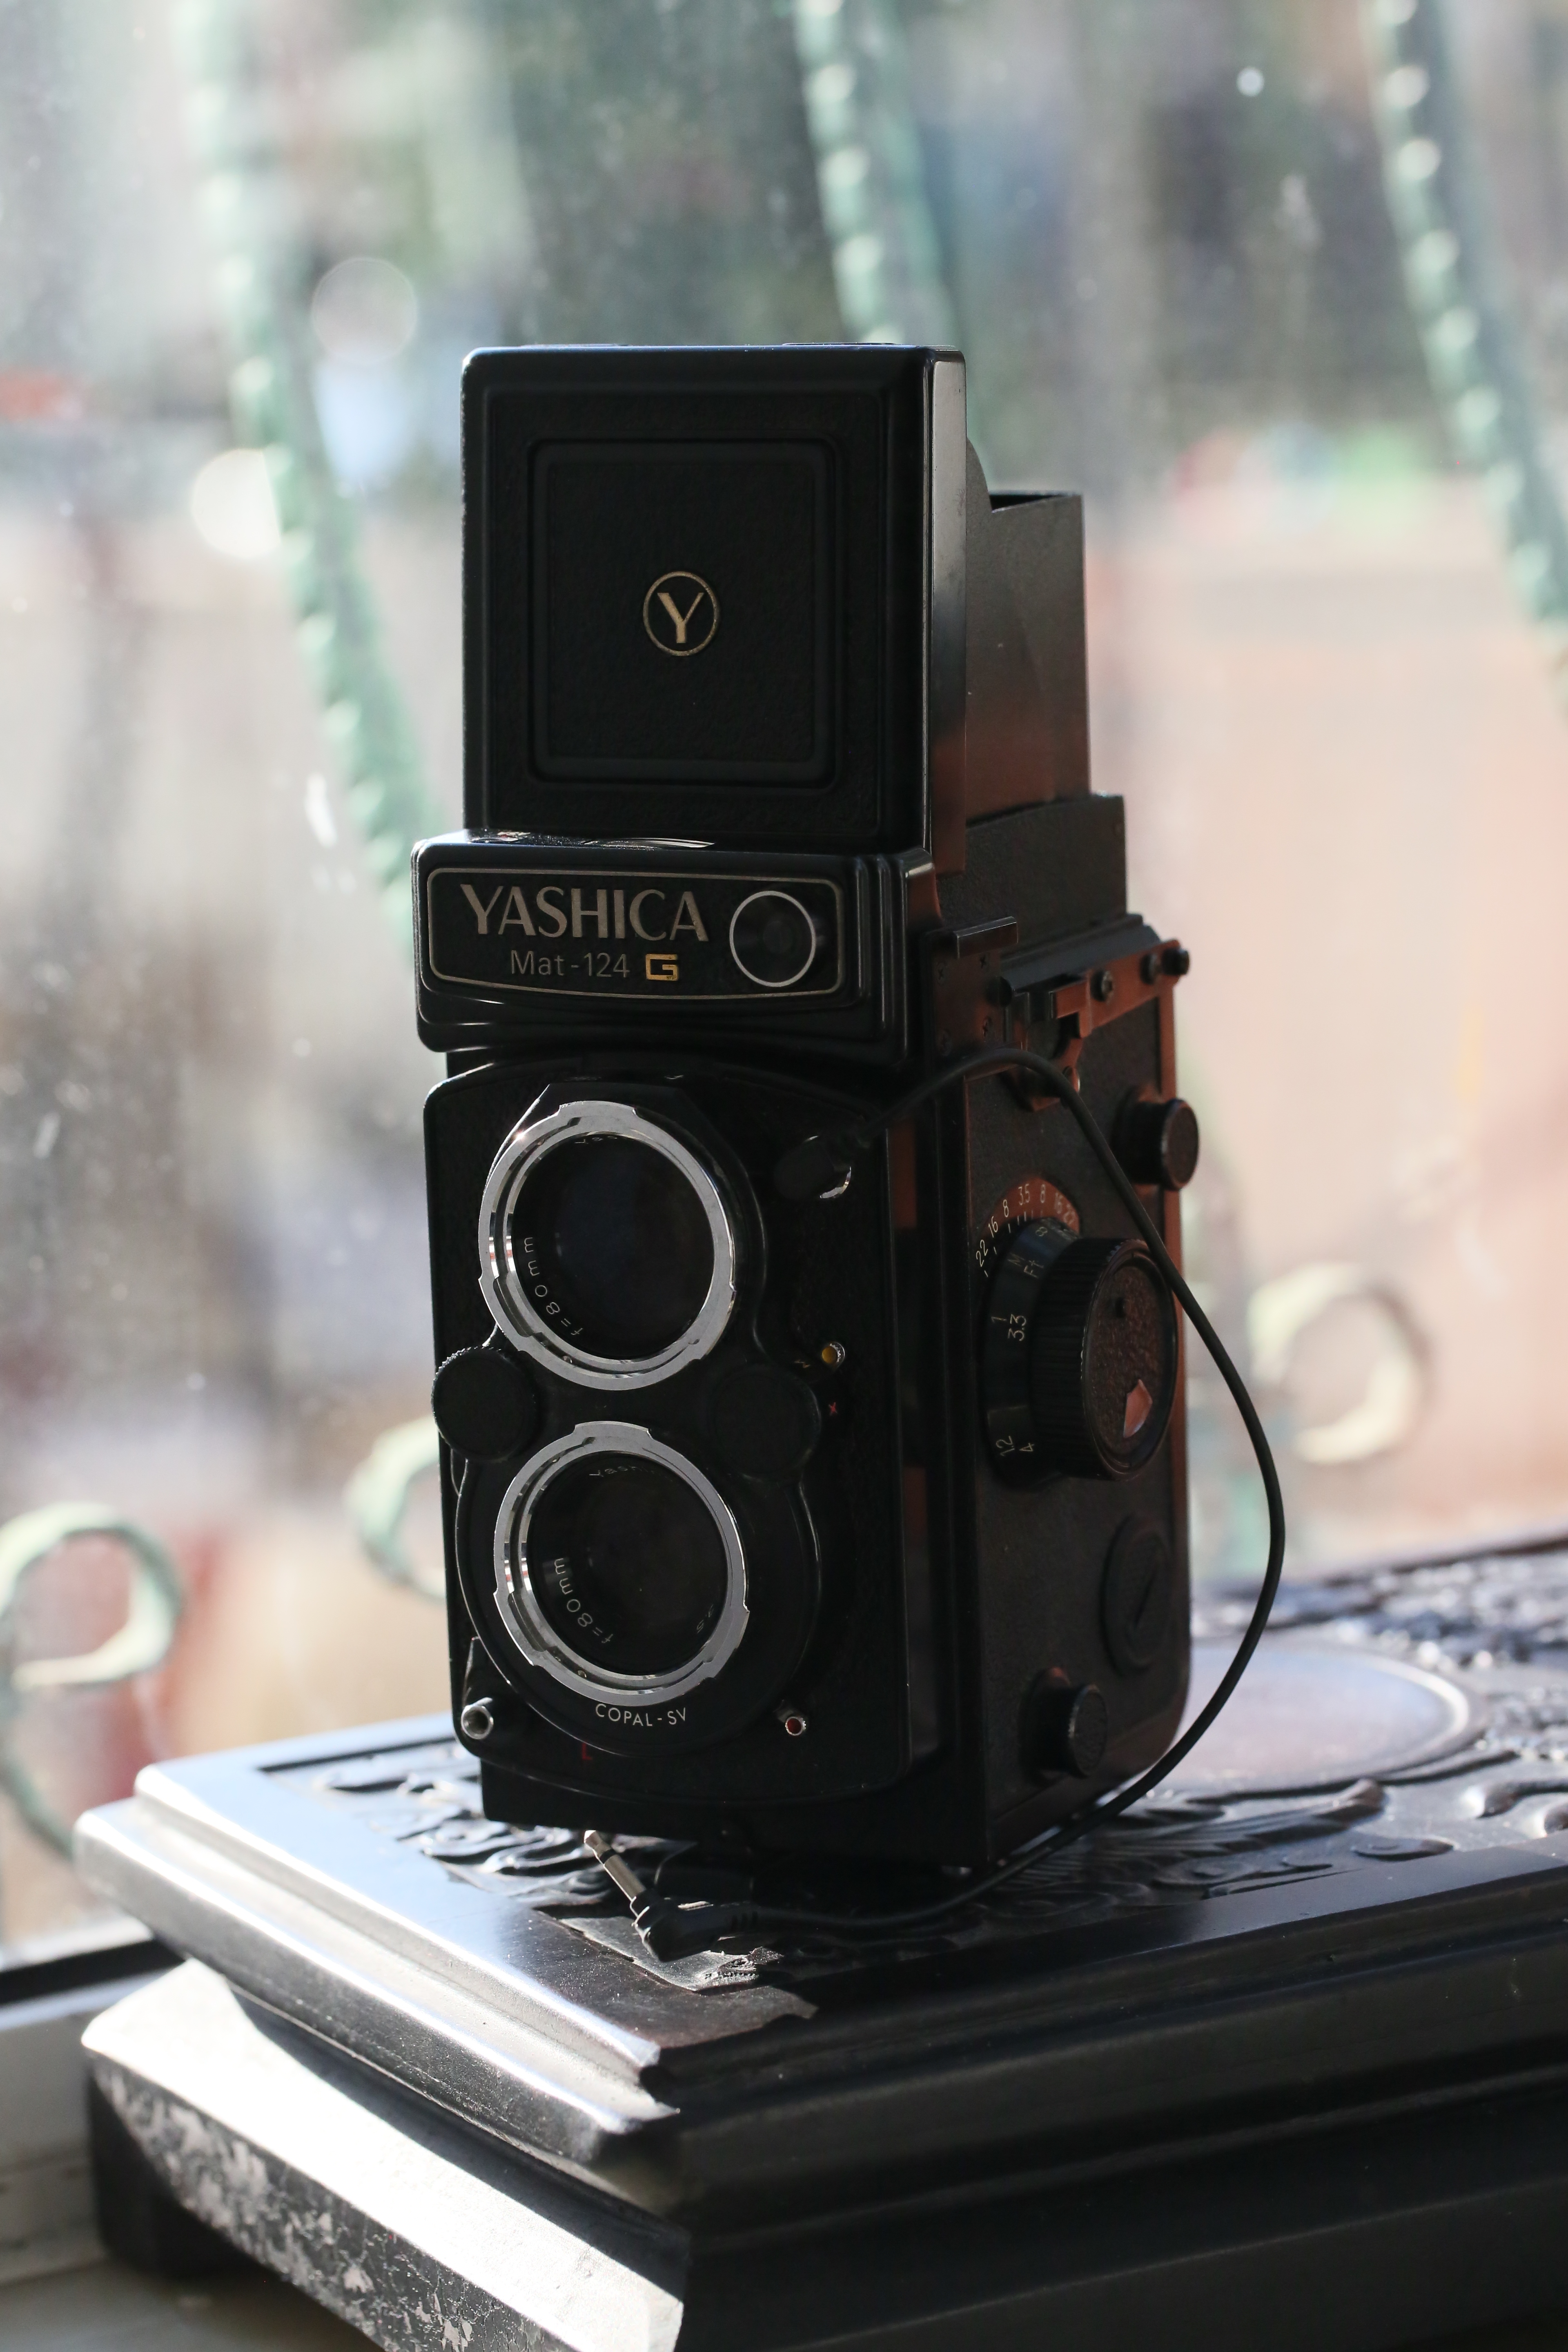 Yashica-Mat 124 G.怀古收藏经典名机